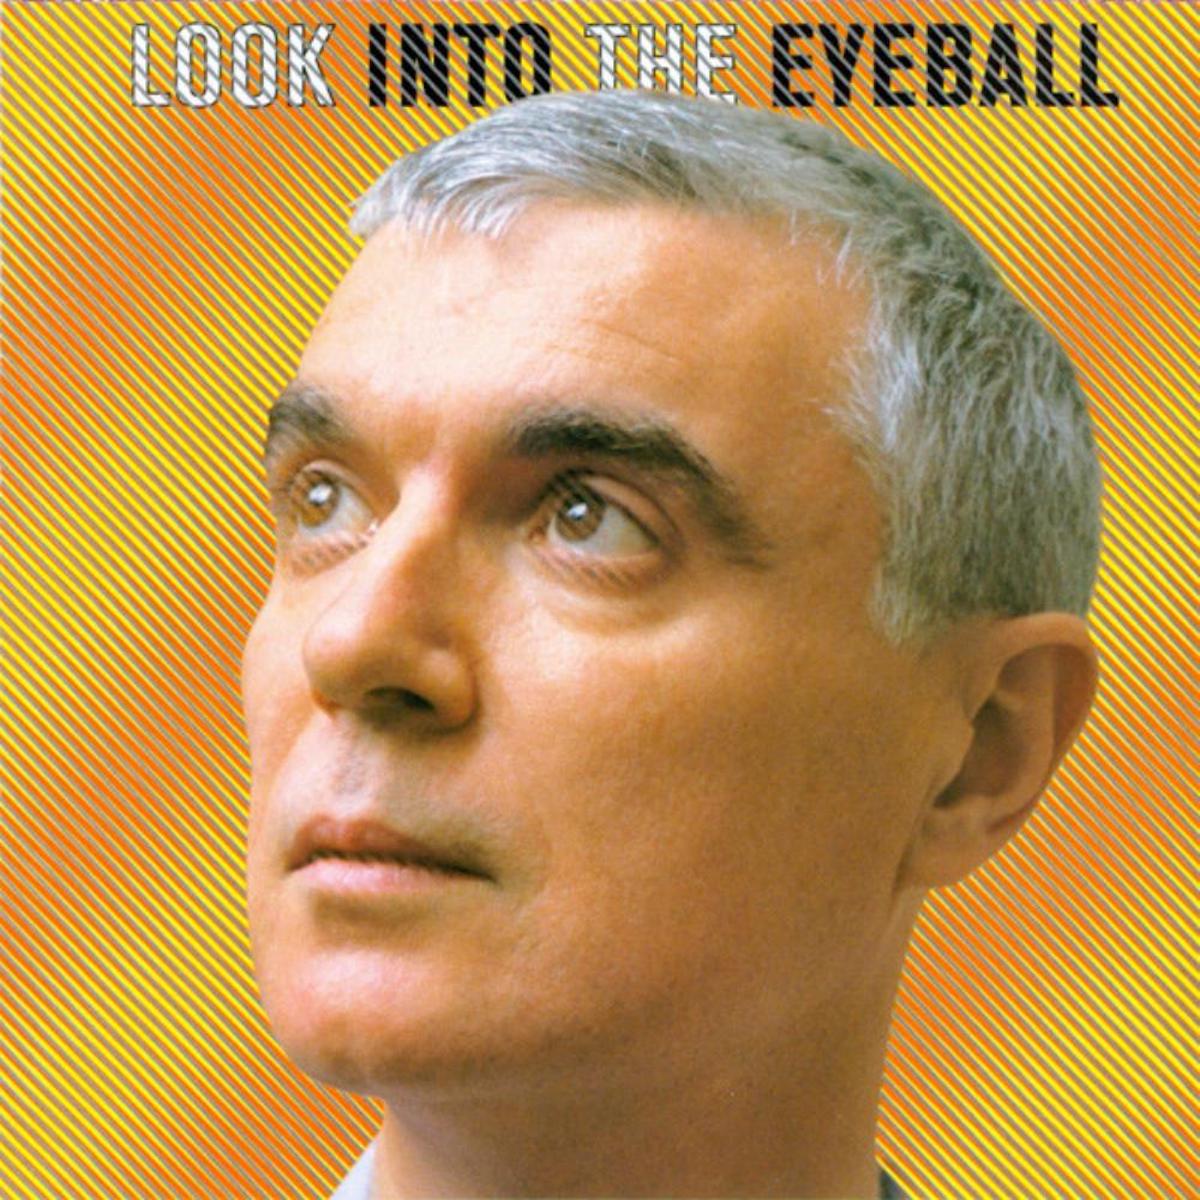 Classic Album Review: David Byrne | Look Into the Eyeball - Tinnitist